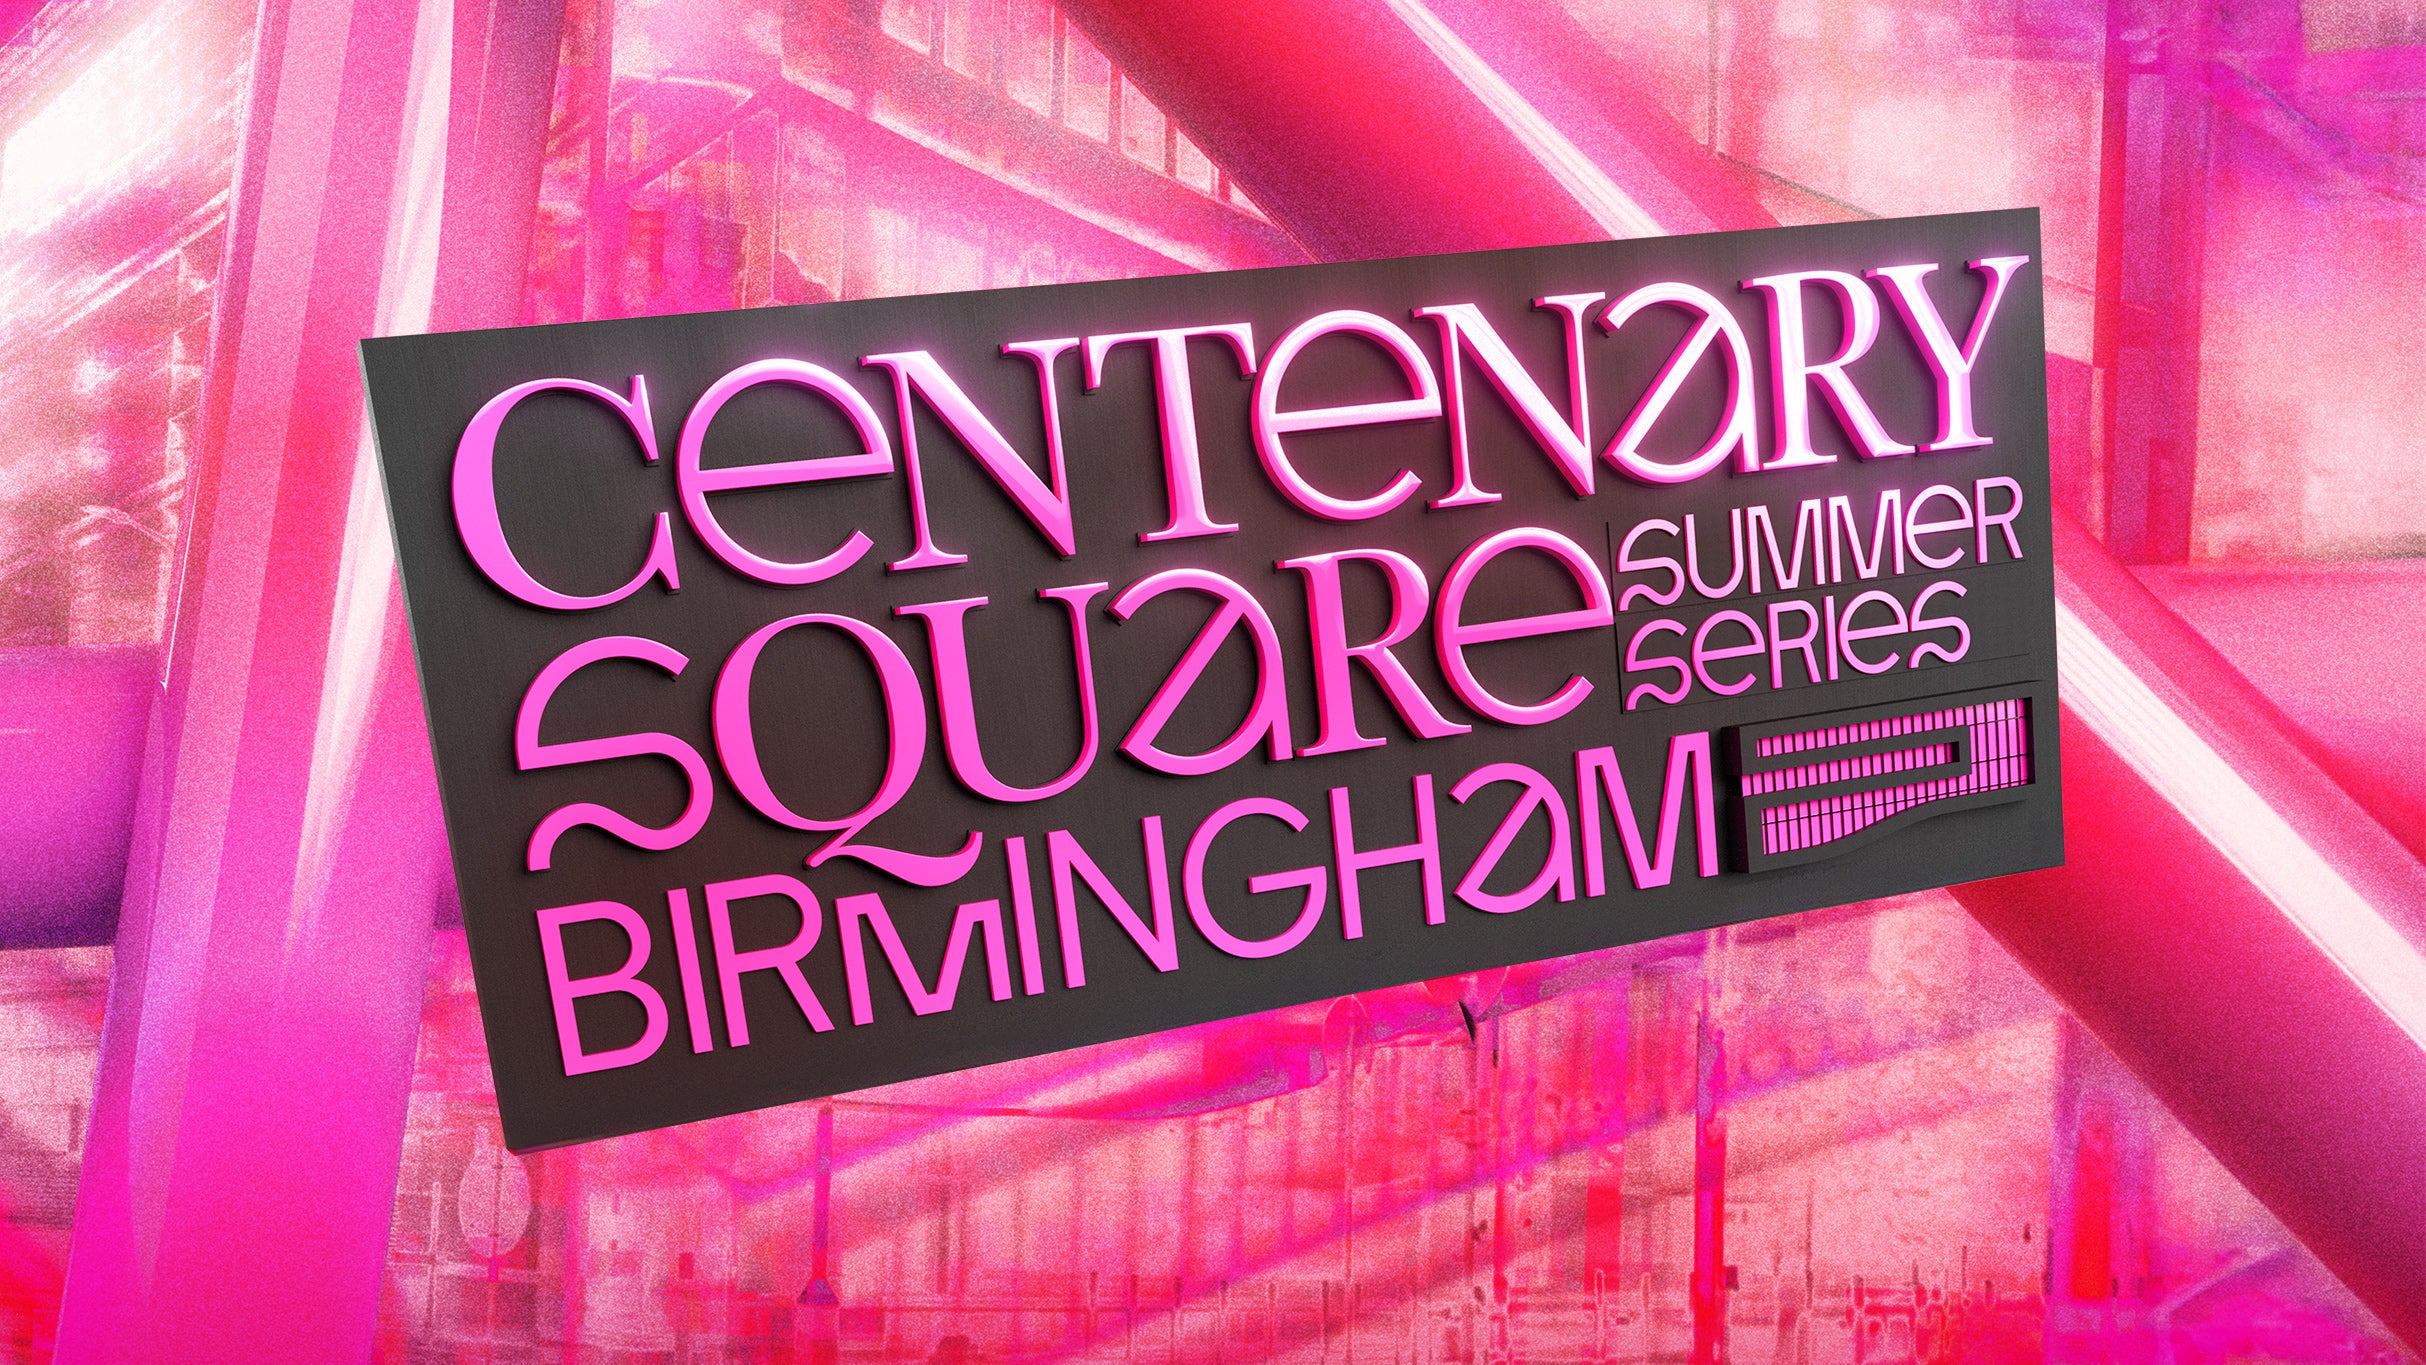 Centenary Square Summer Series: Jungle in Birmingham promo photo for Metropolis Music presale offer code